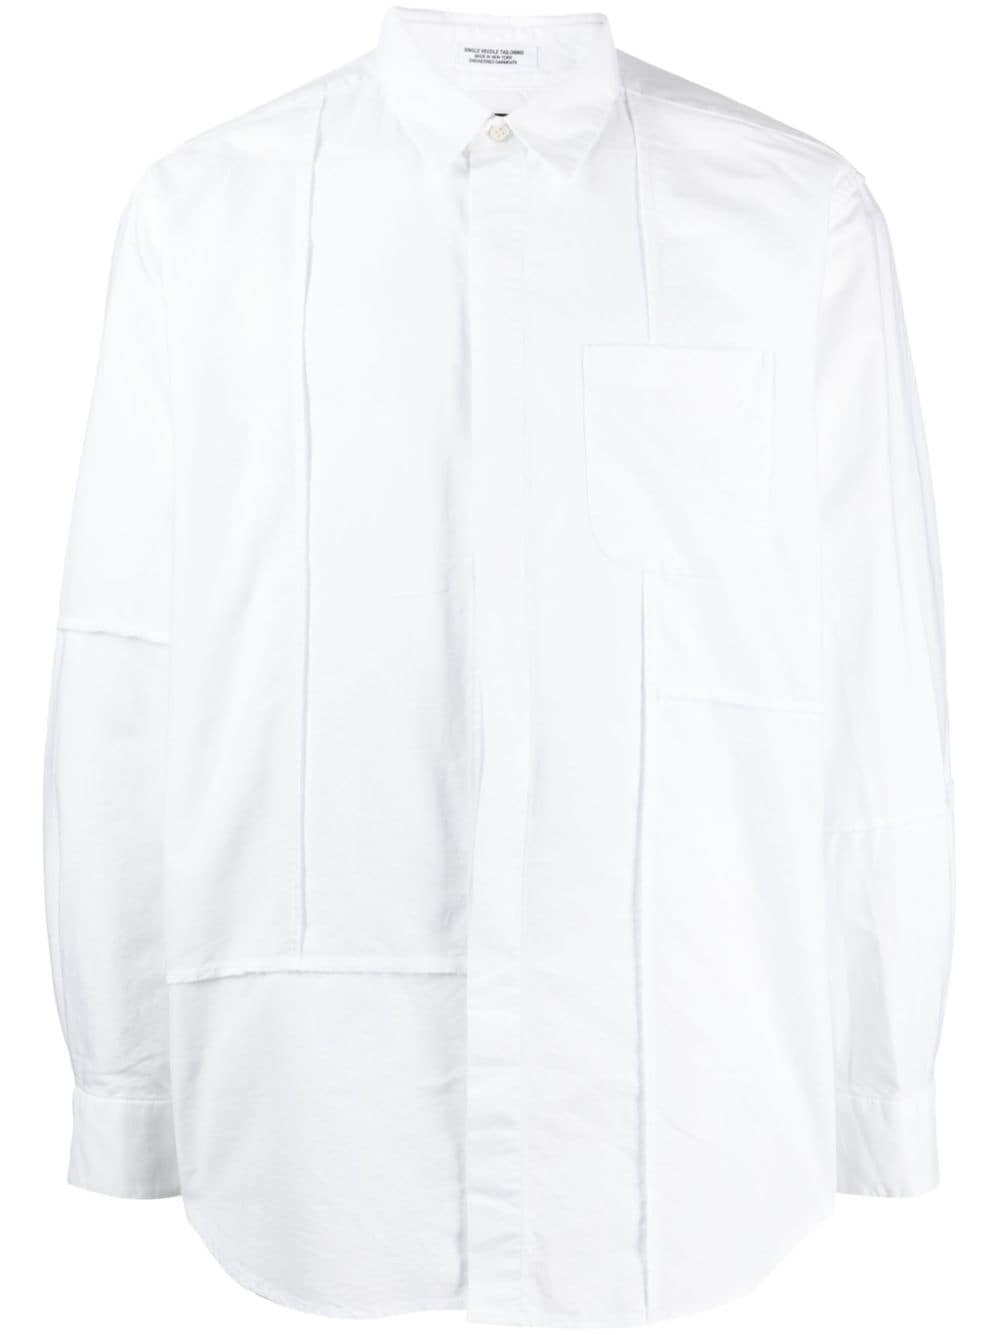 19 Century BD cotton shirt - 1